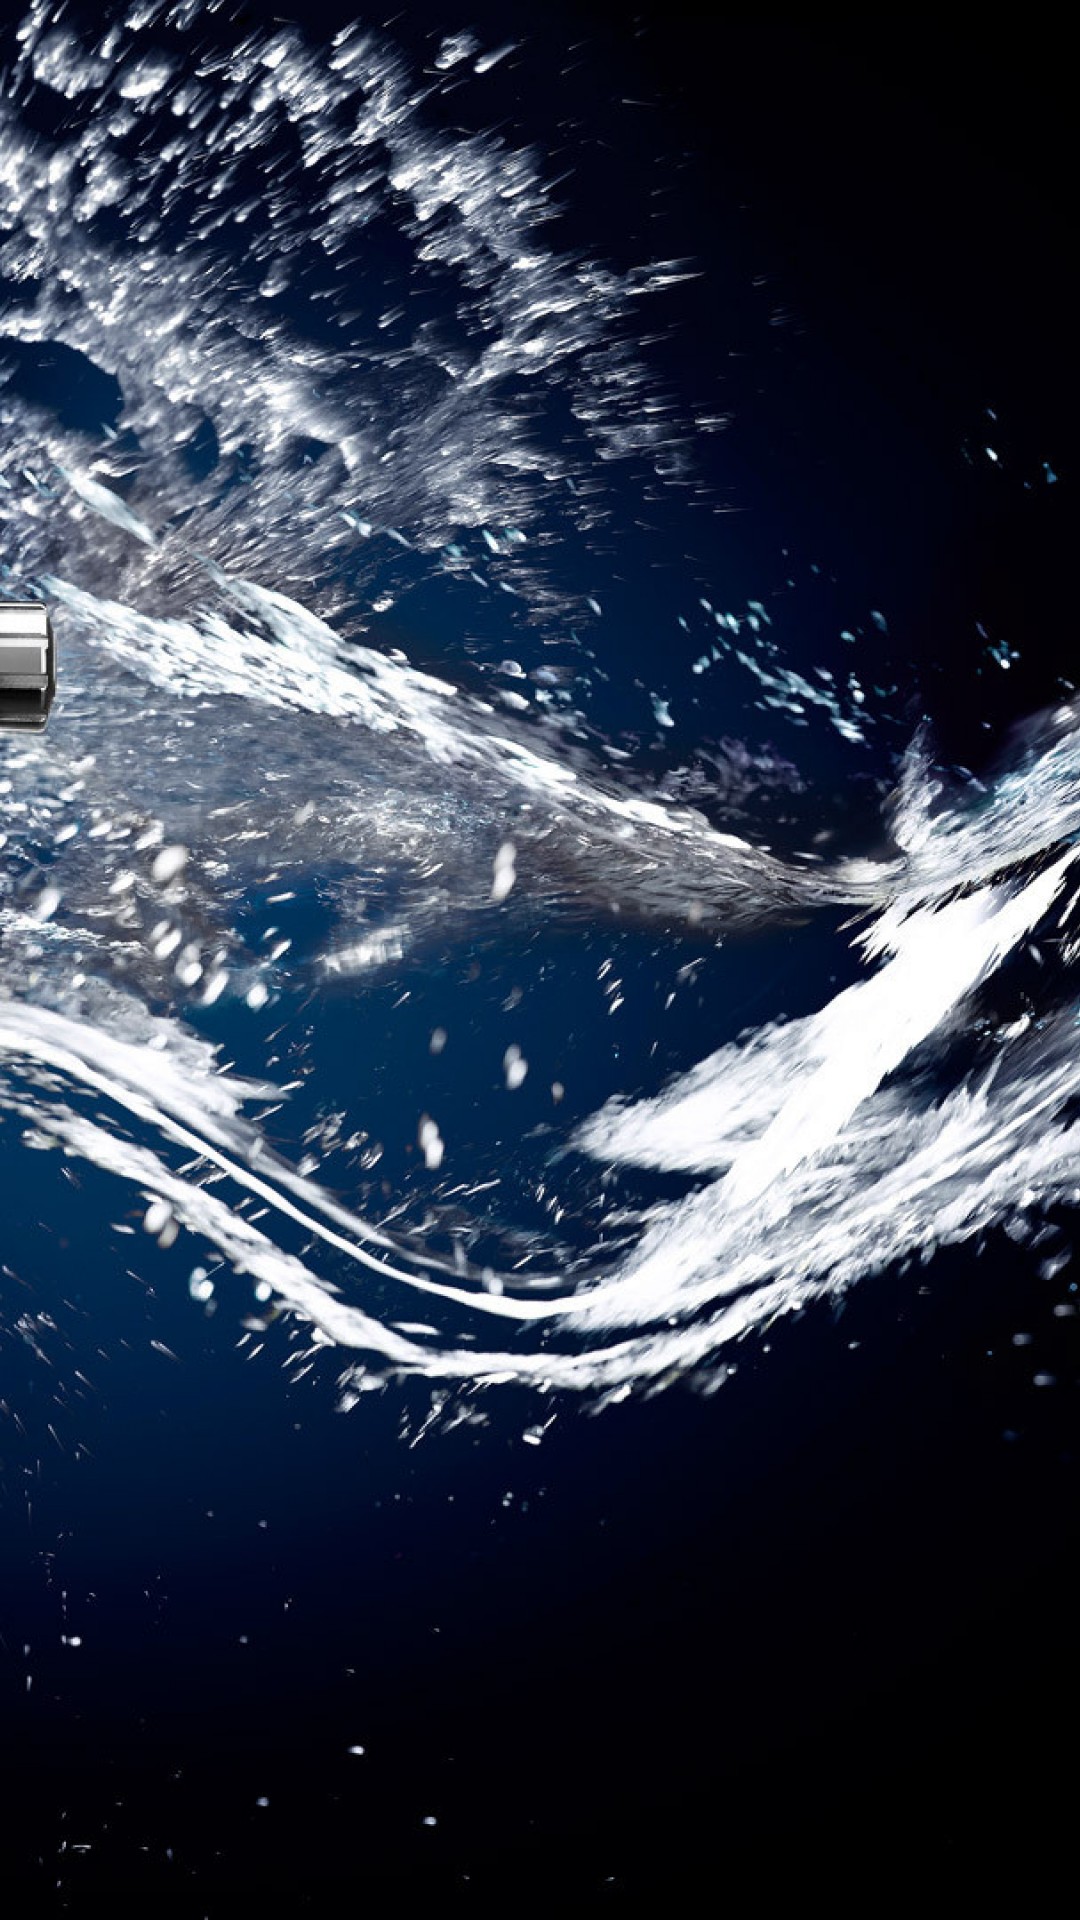 Omega Seamaster Planet Ocean Watch Hd Wallpaper Iphone 6 6s Plus Hd Wallpaper Wallpapers Net